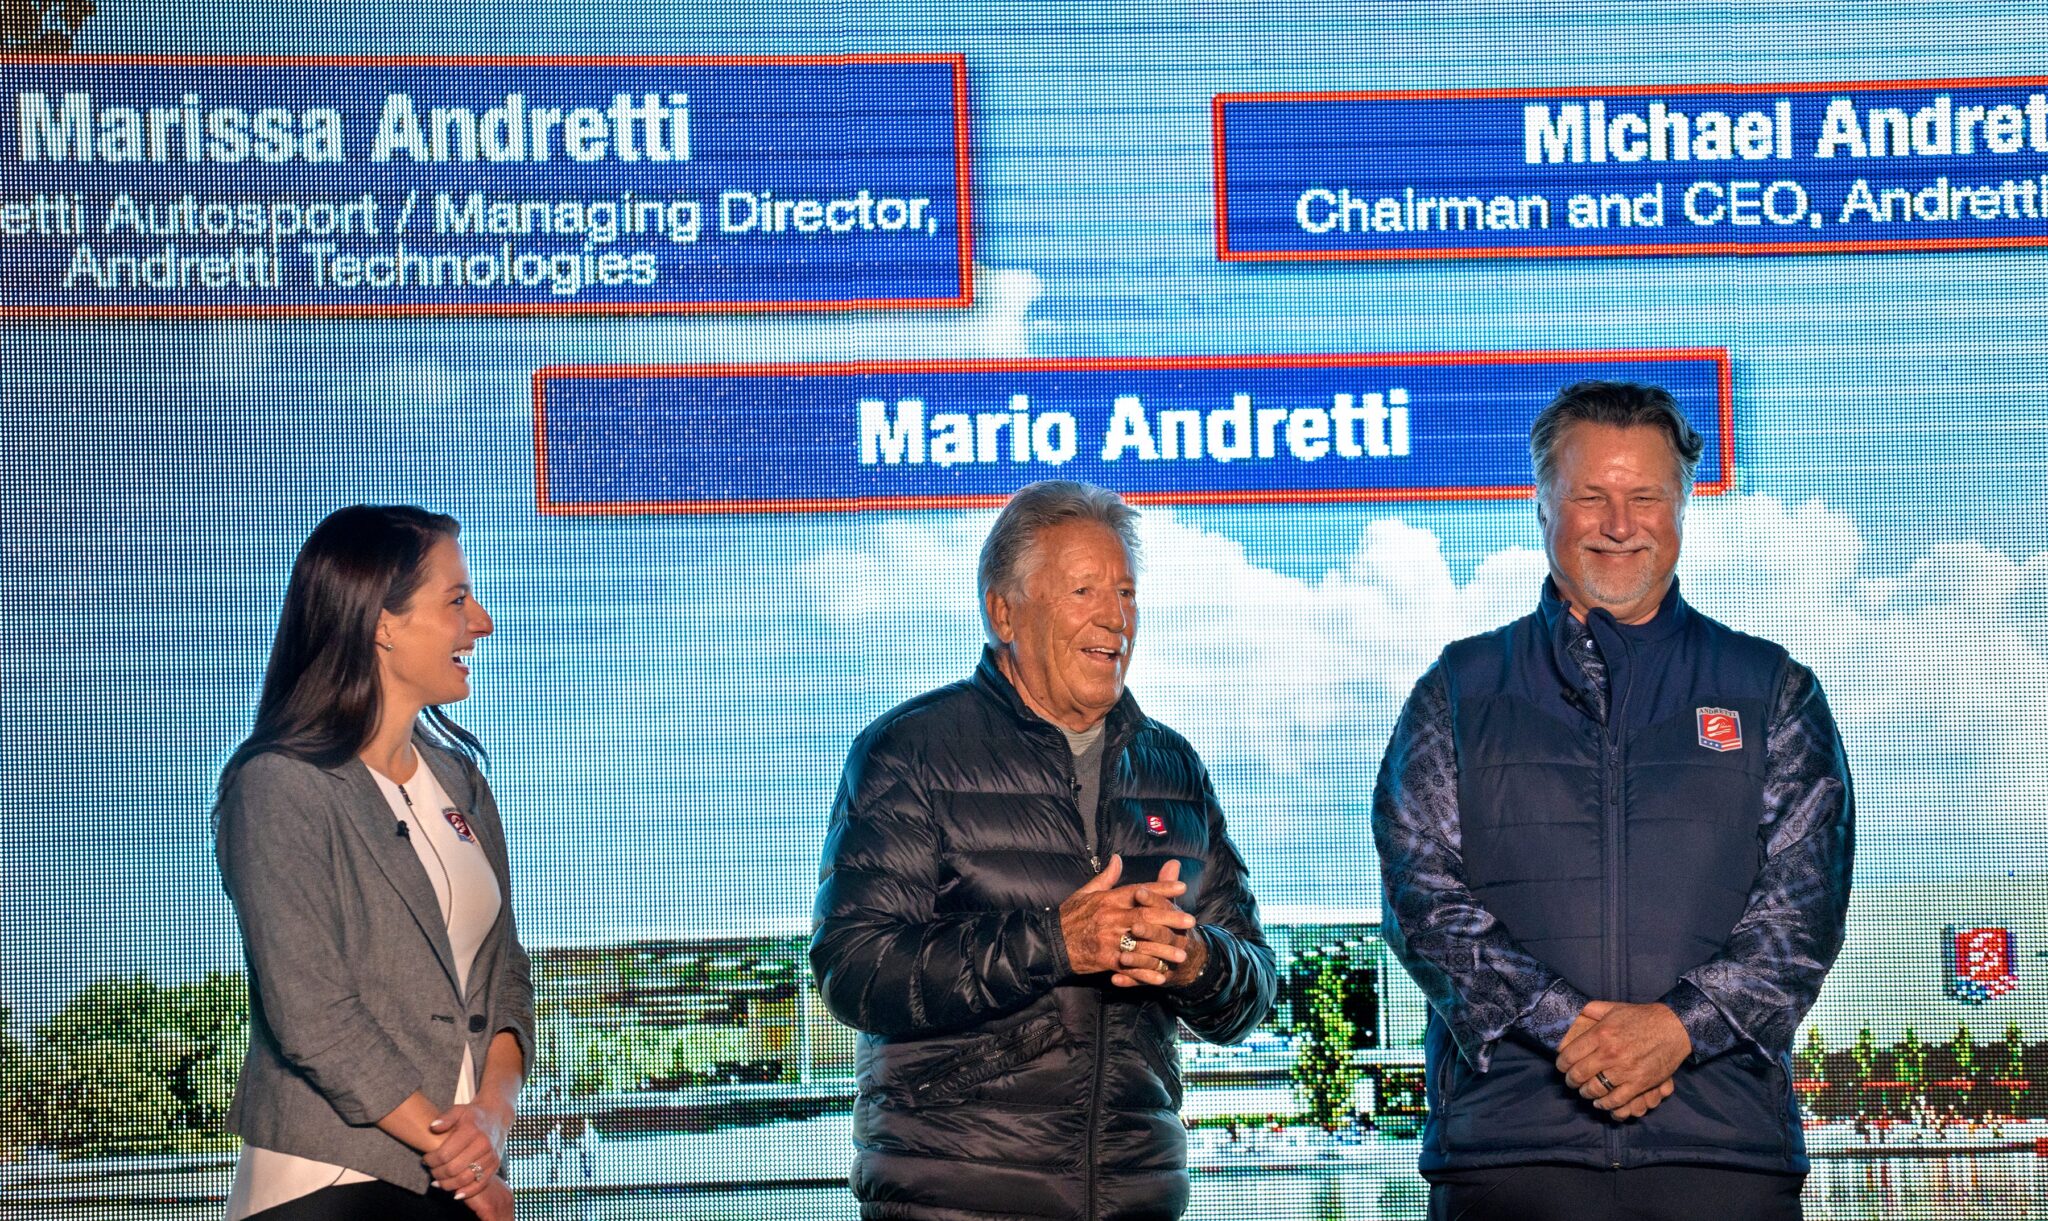 - Wolff calls the Andretti-GM F1 partnership "a statement"